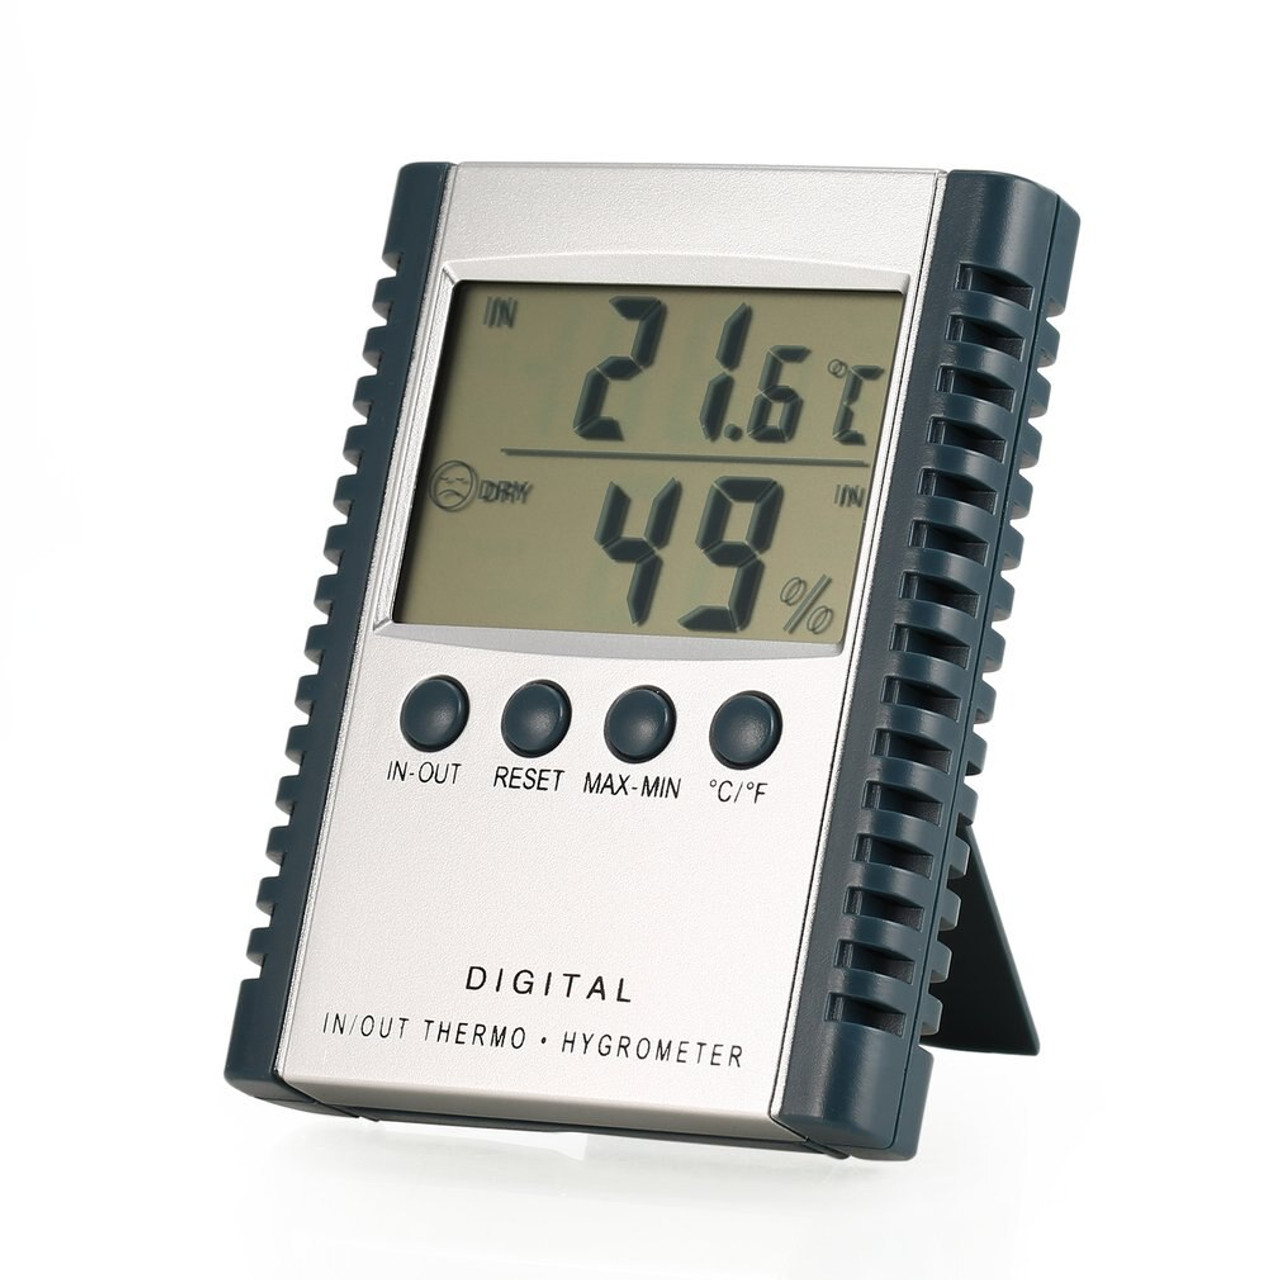 Indoor - outdoor thermometer hugrometer weather station.